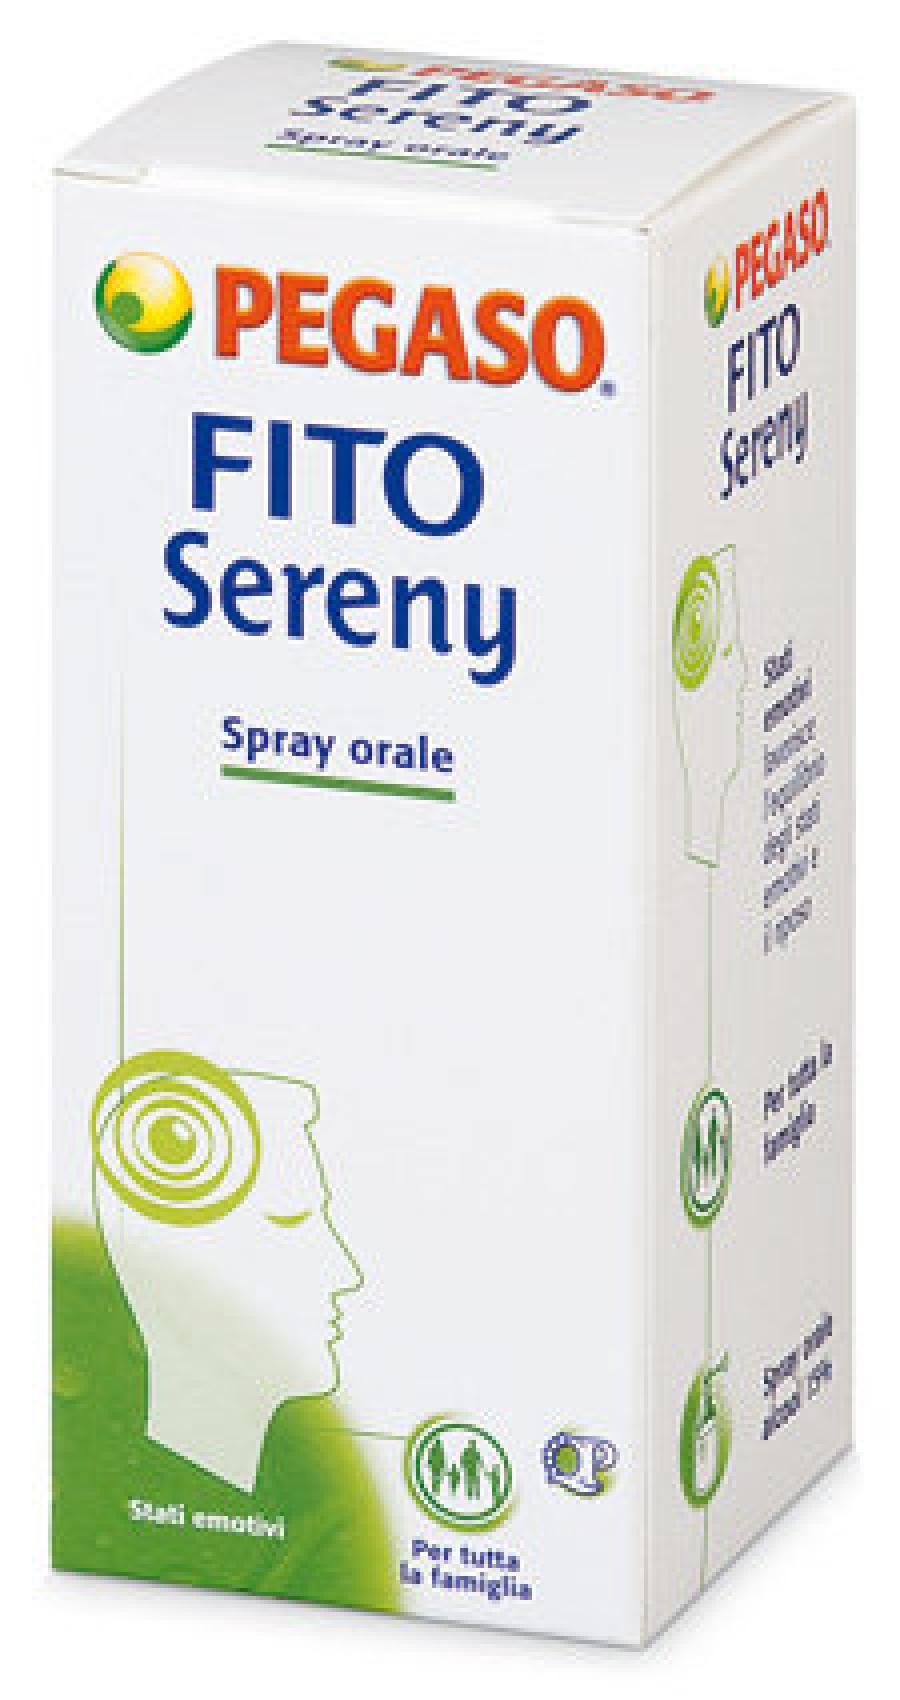 Fitosereny pegaso spray 50 ml rilassante